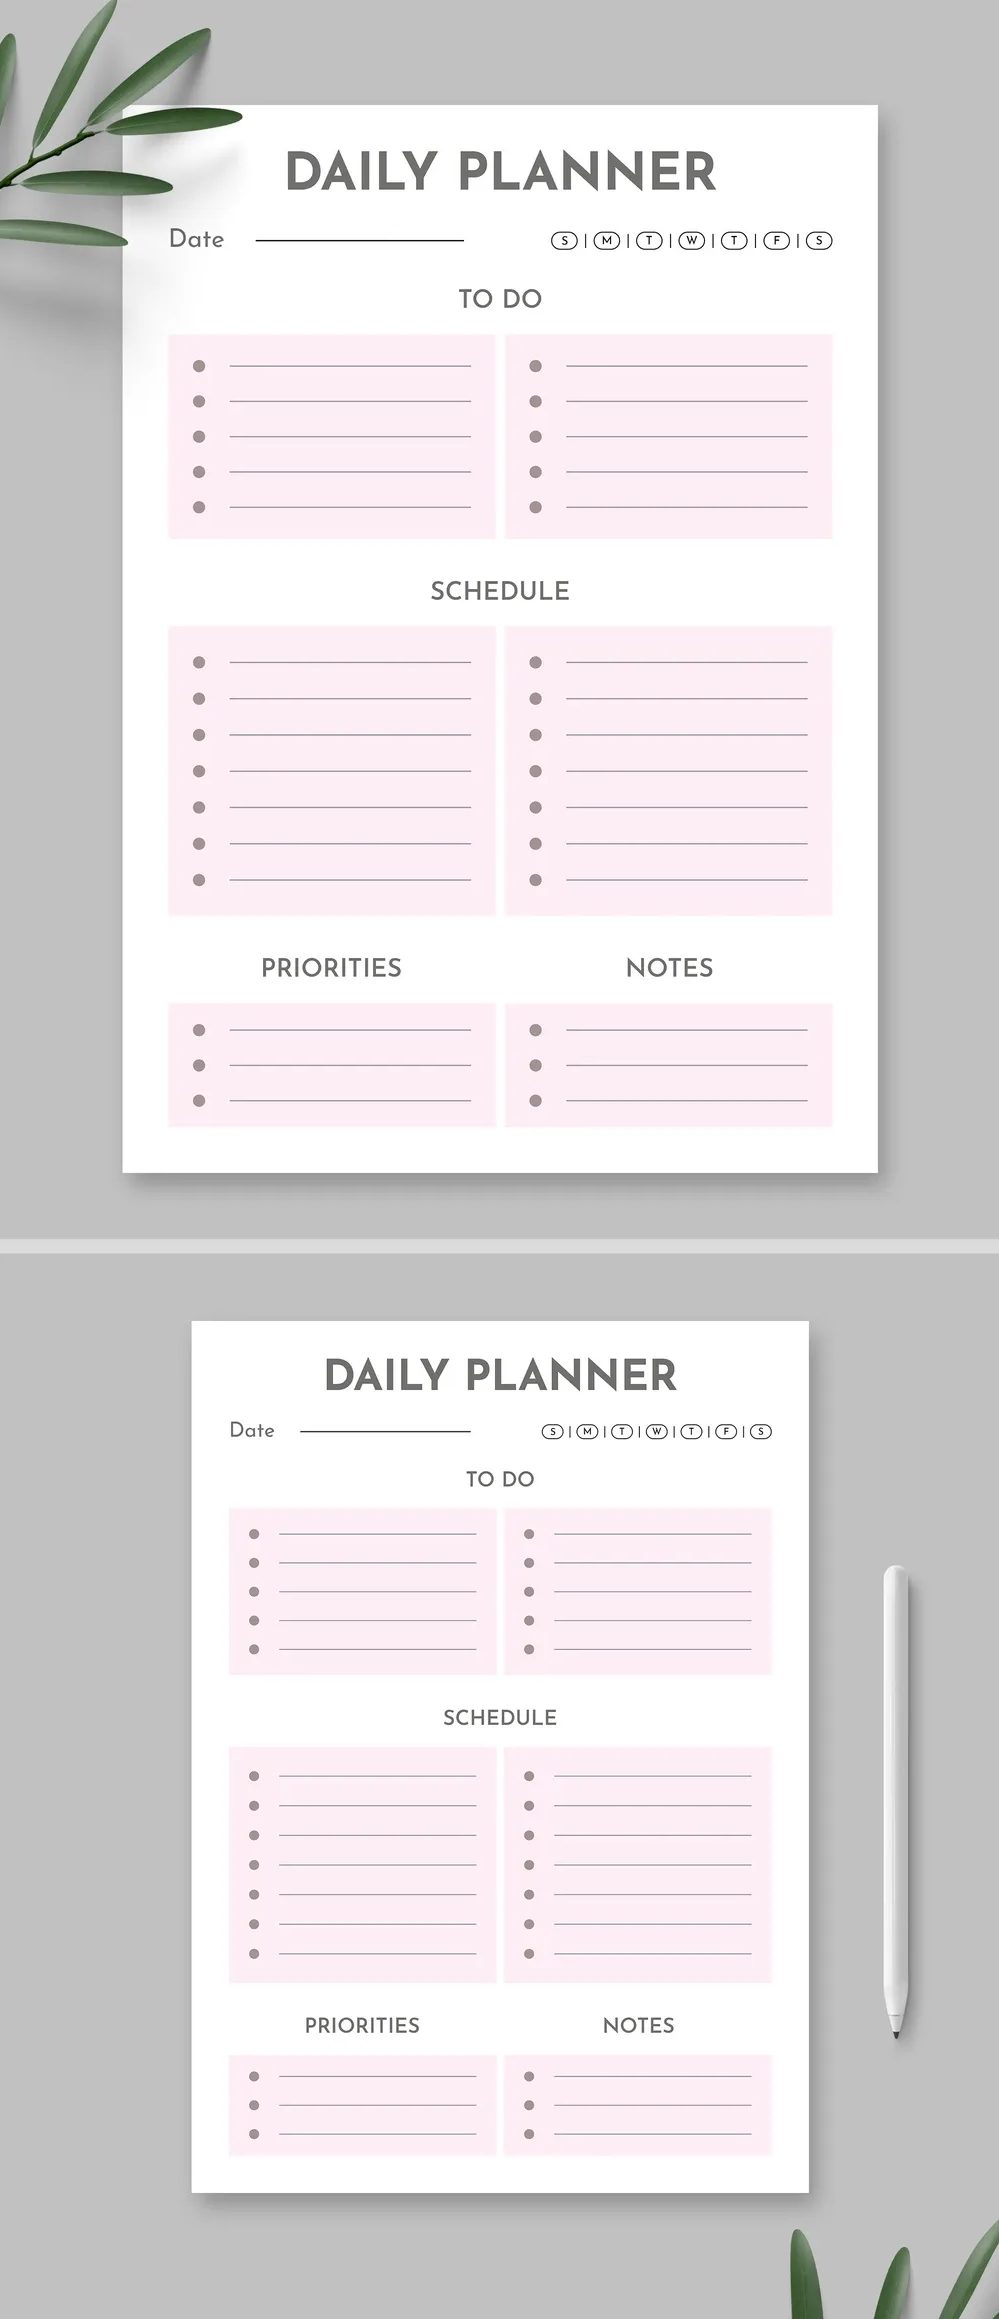 Adobestock - Daily Planner Layout With Minimalist Design 721272004